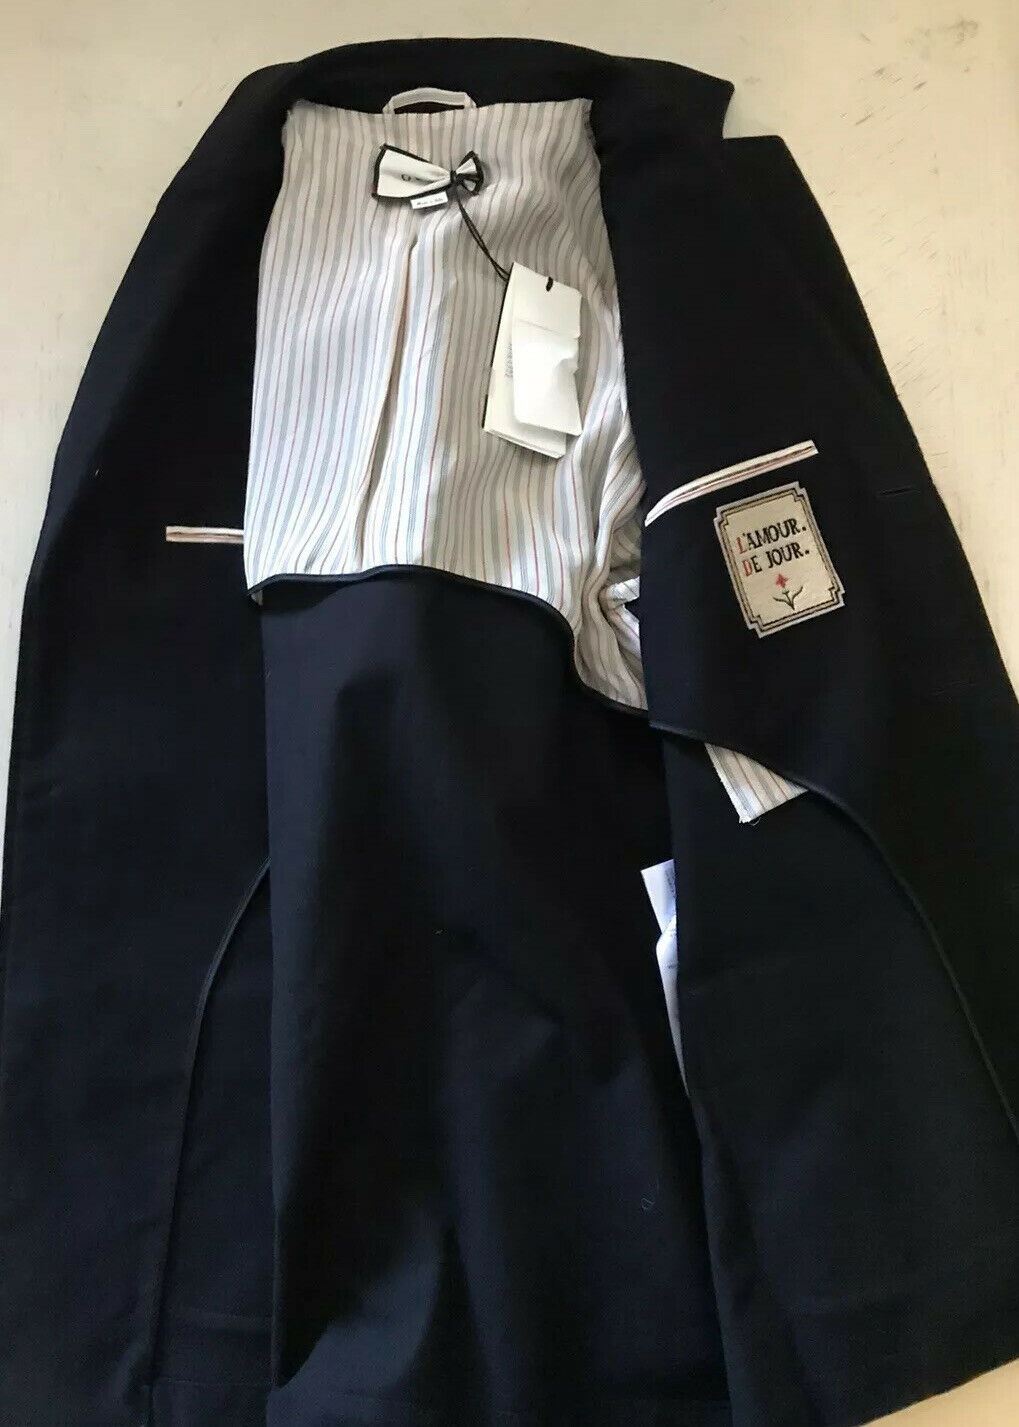 New $2400 Gucci Men Cotton Moleskin W/Leath Coat Jacket Black 36 US ( 46 Eu )